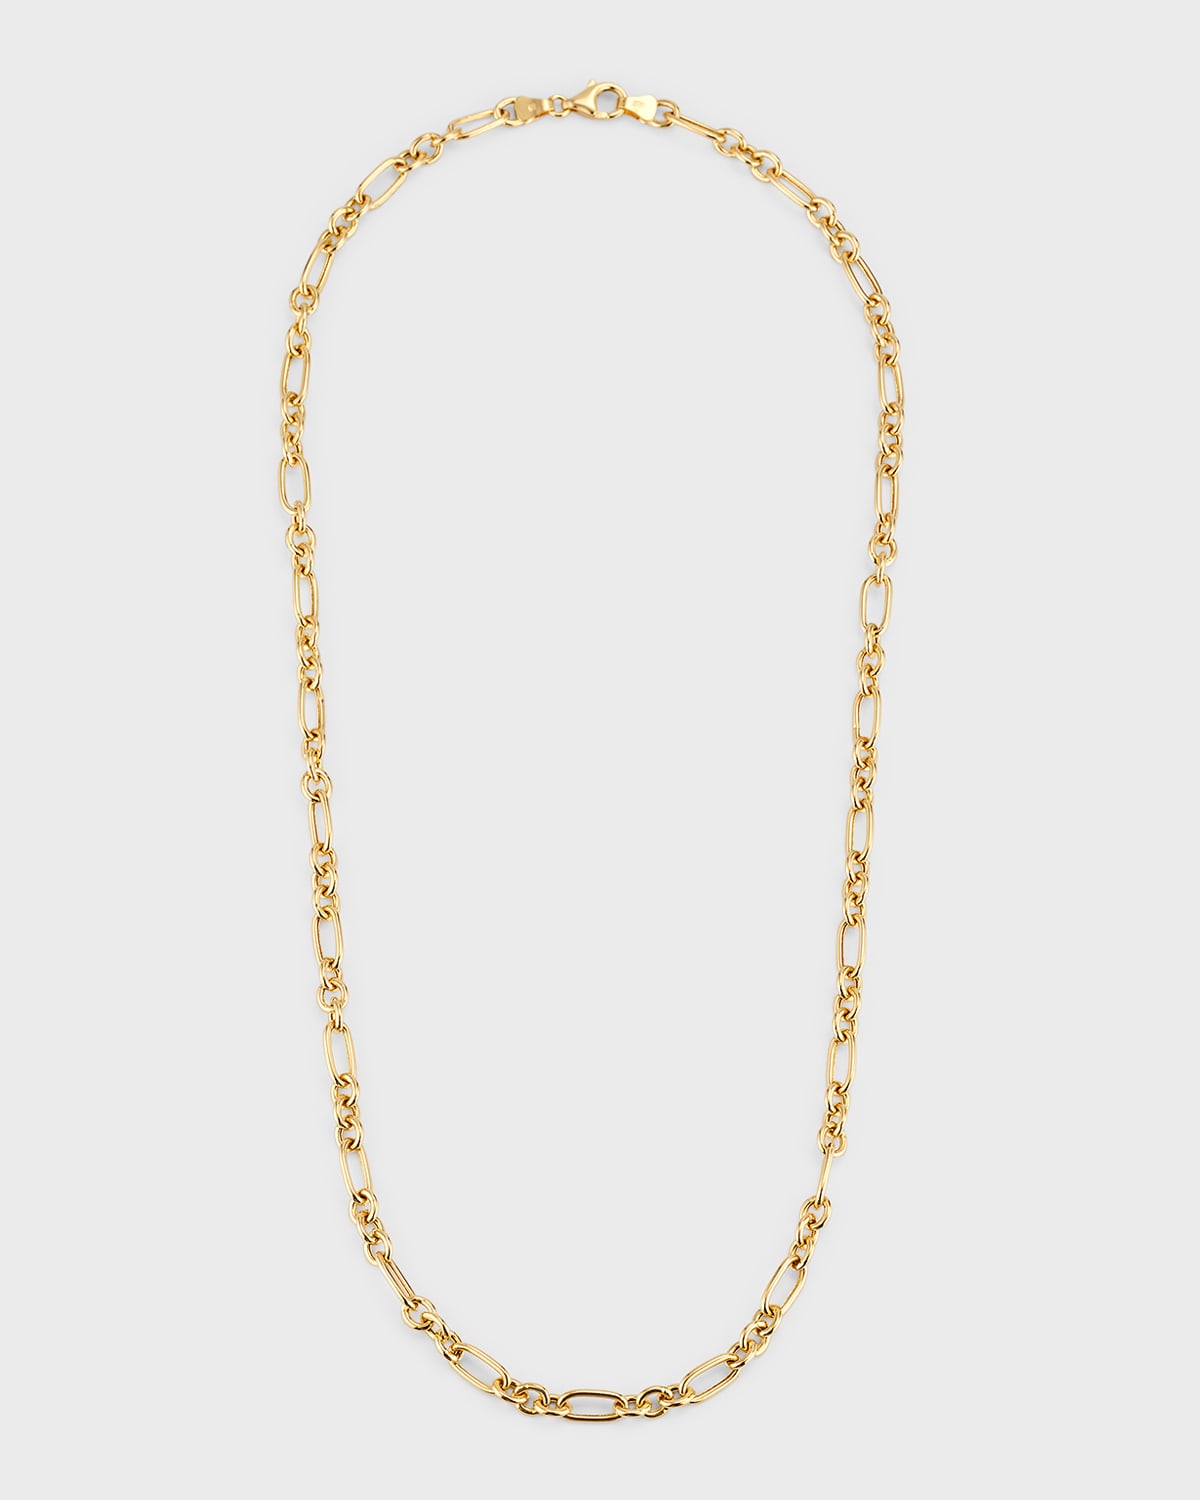 Siena Lasker 14k Yellow Gold Chain Necklace